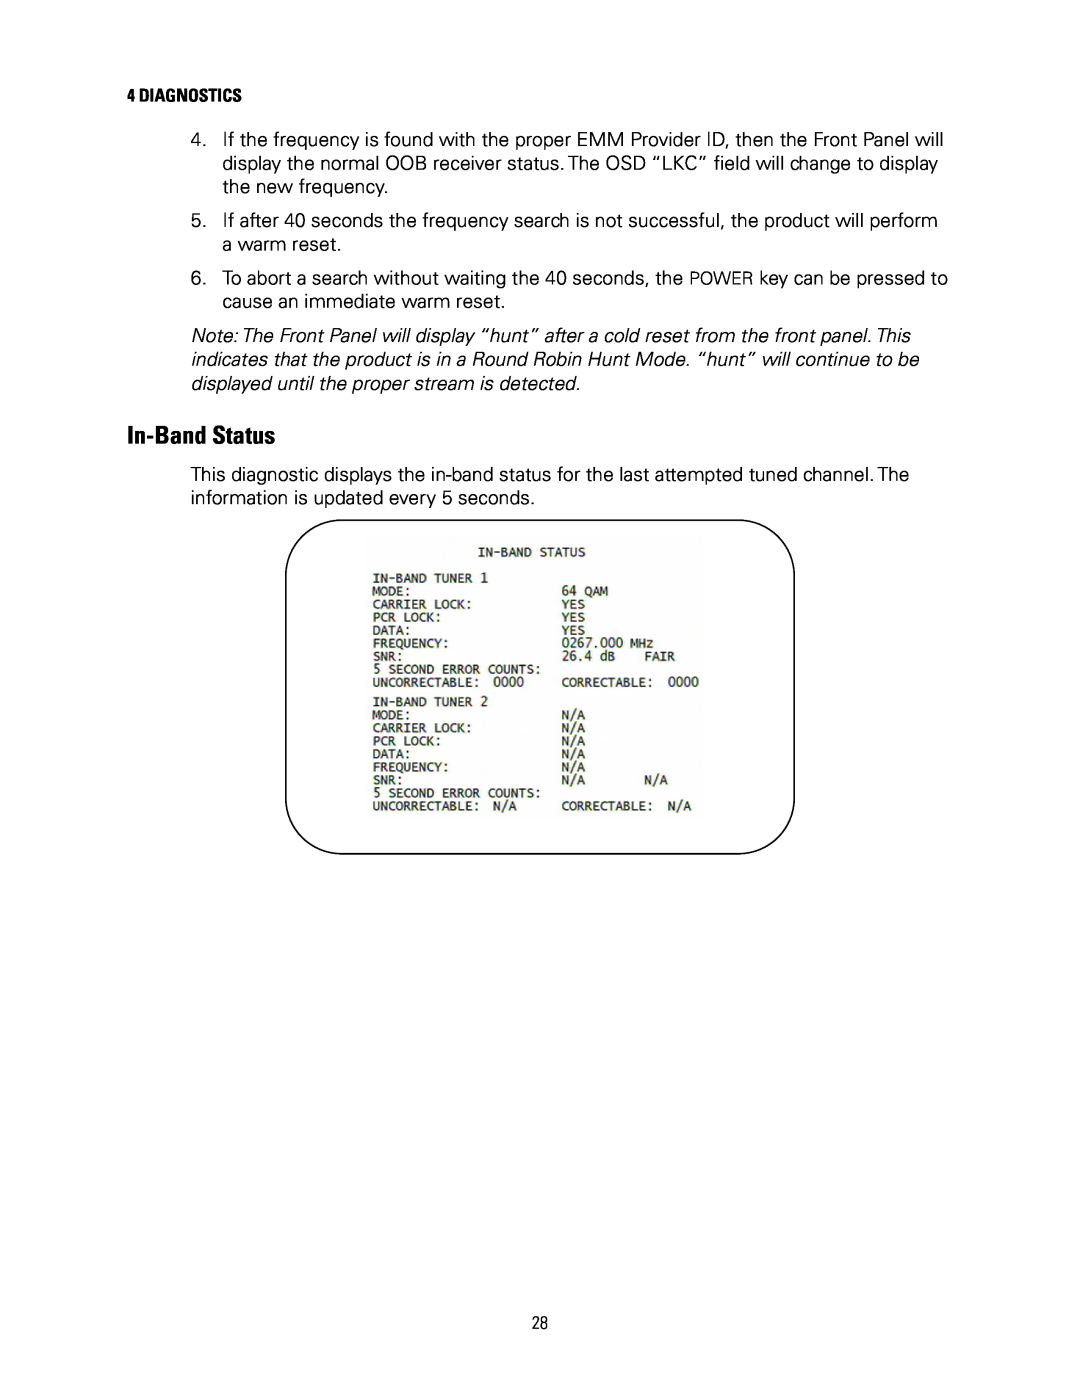 Motorola DCH3200 installation manual In-BandStatus, 4DIAGNOSTICS 